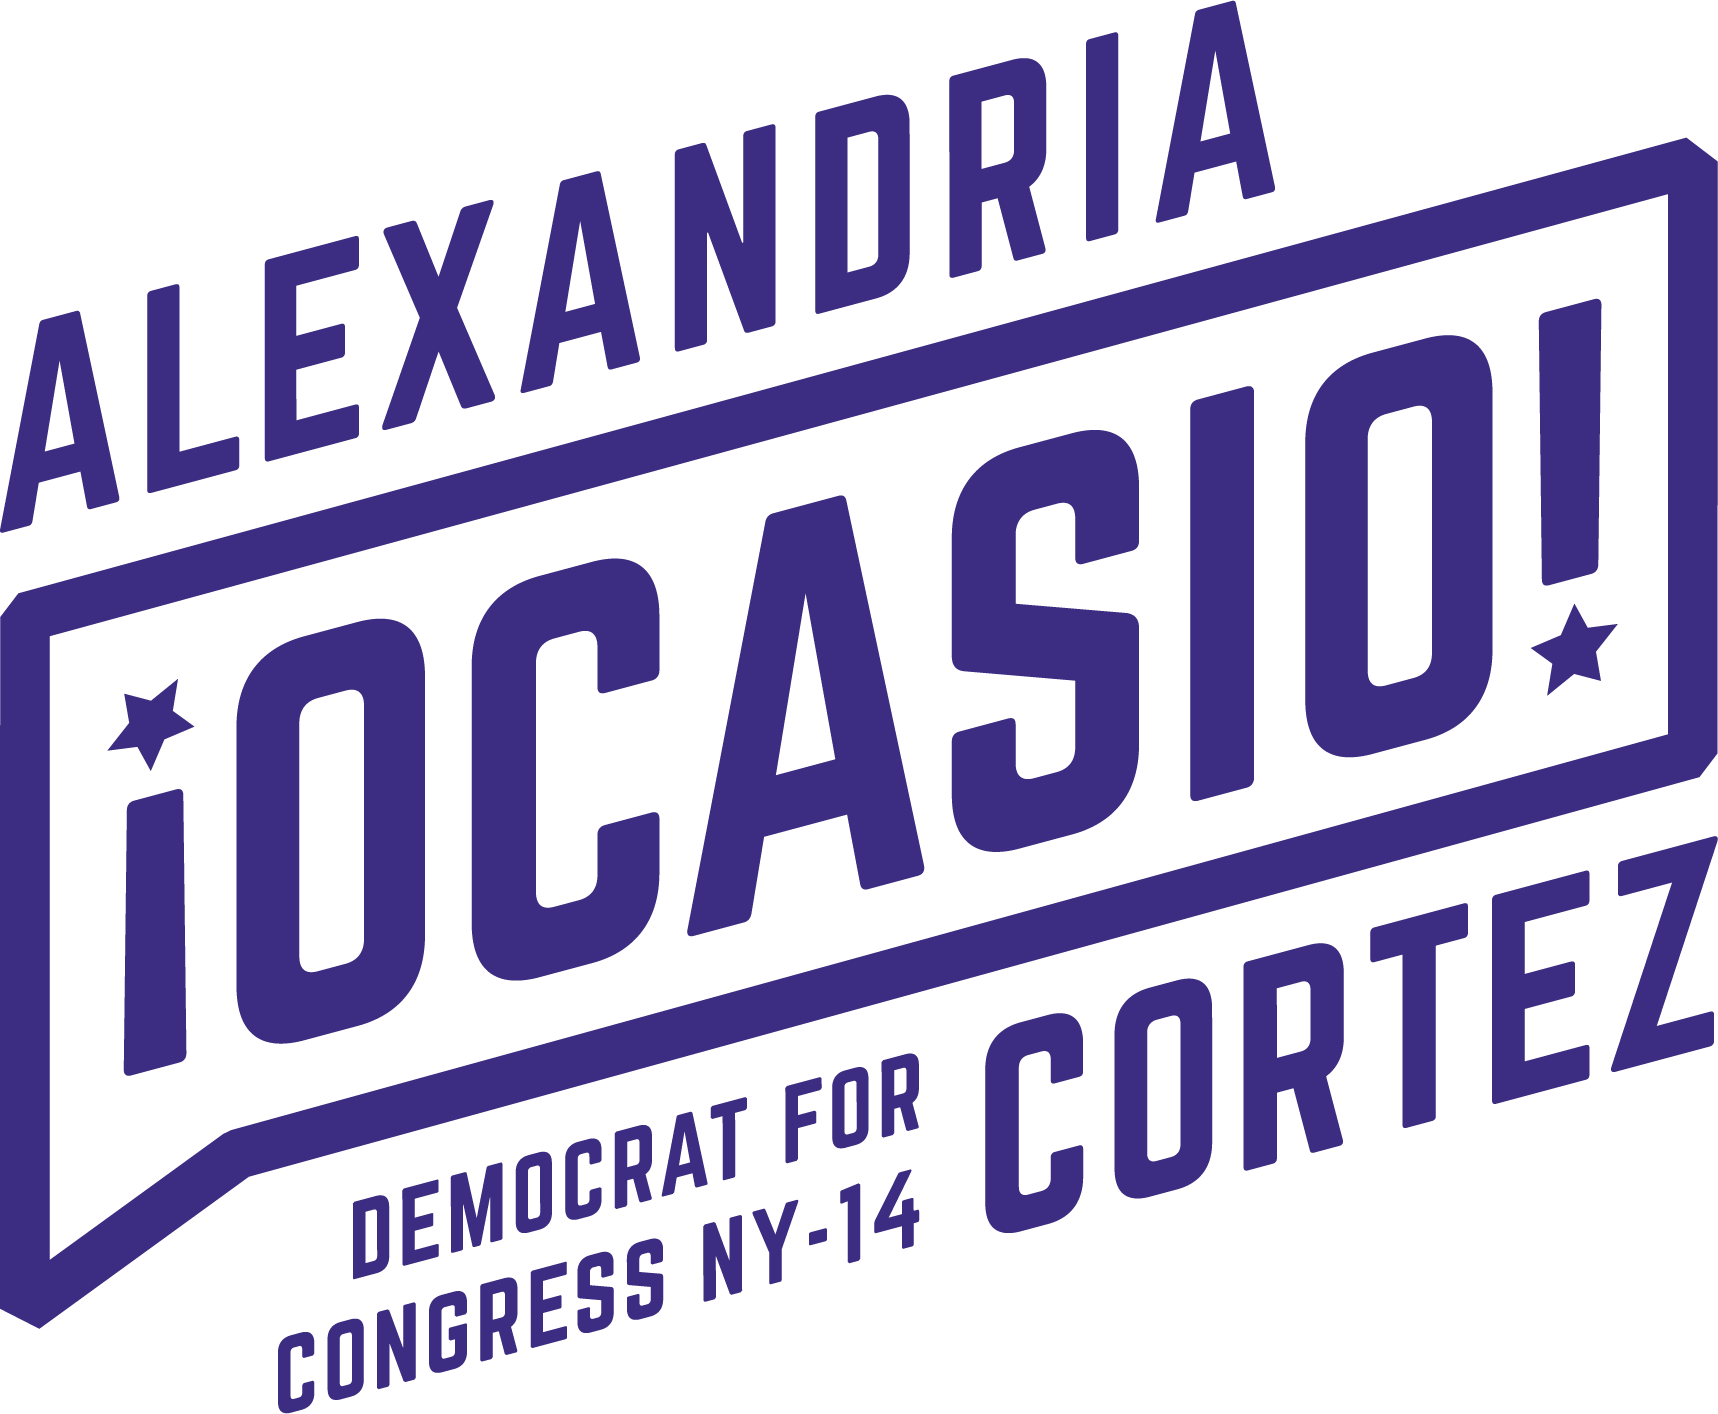 Alexandria Ocasio-Cortez for Congress